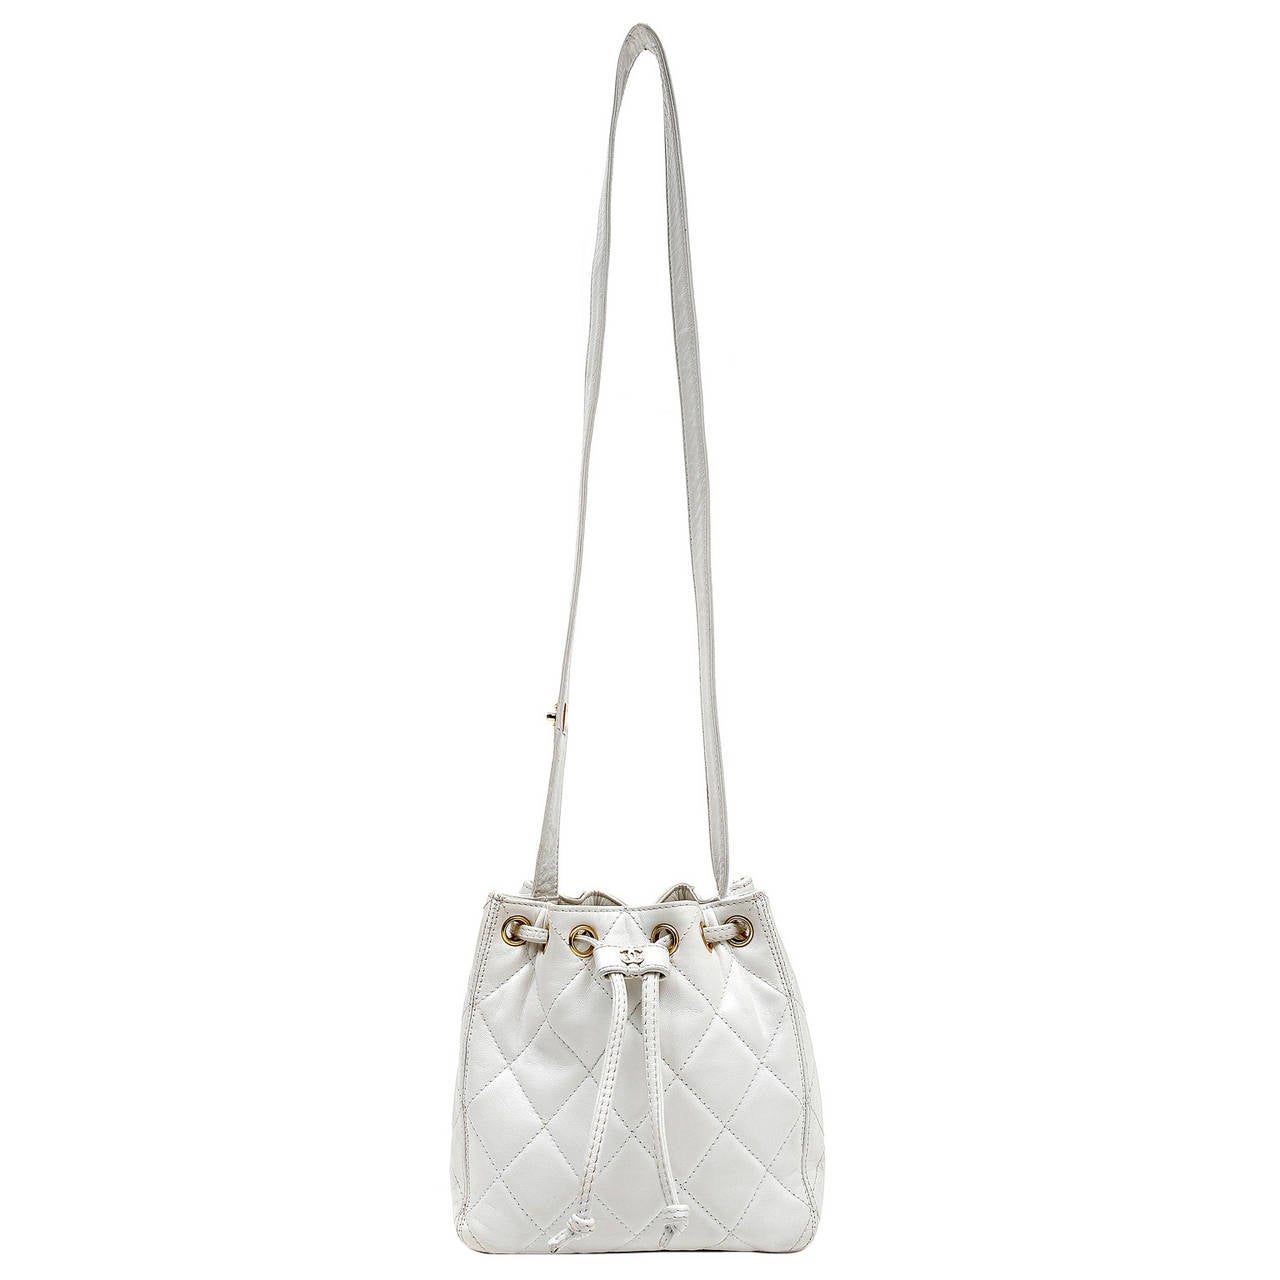 Chanel White Lambskin Small Bucket Bag